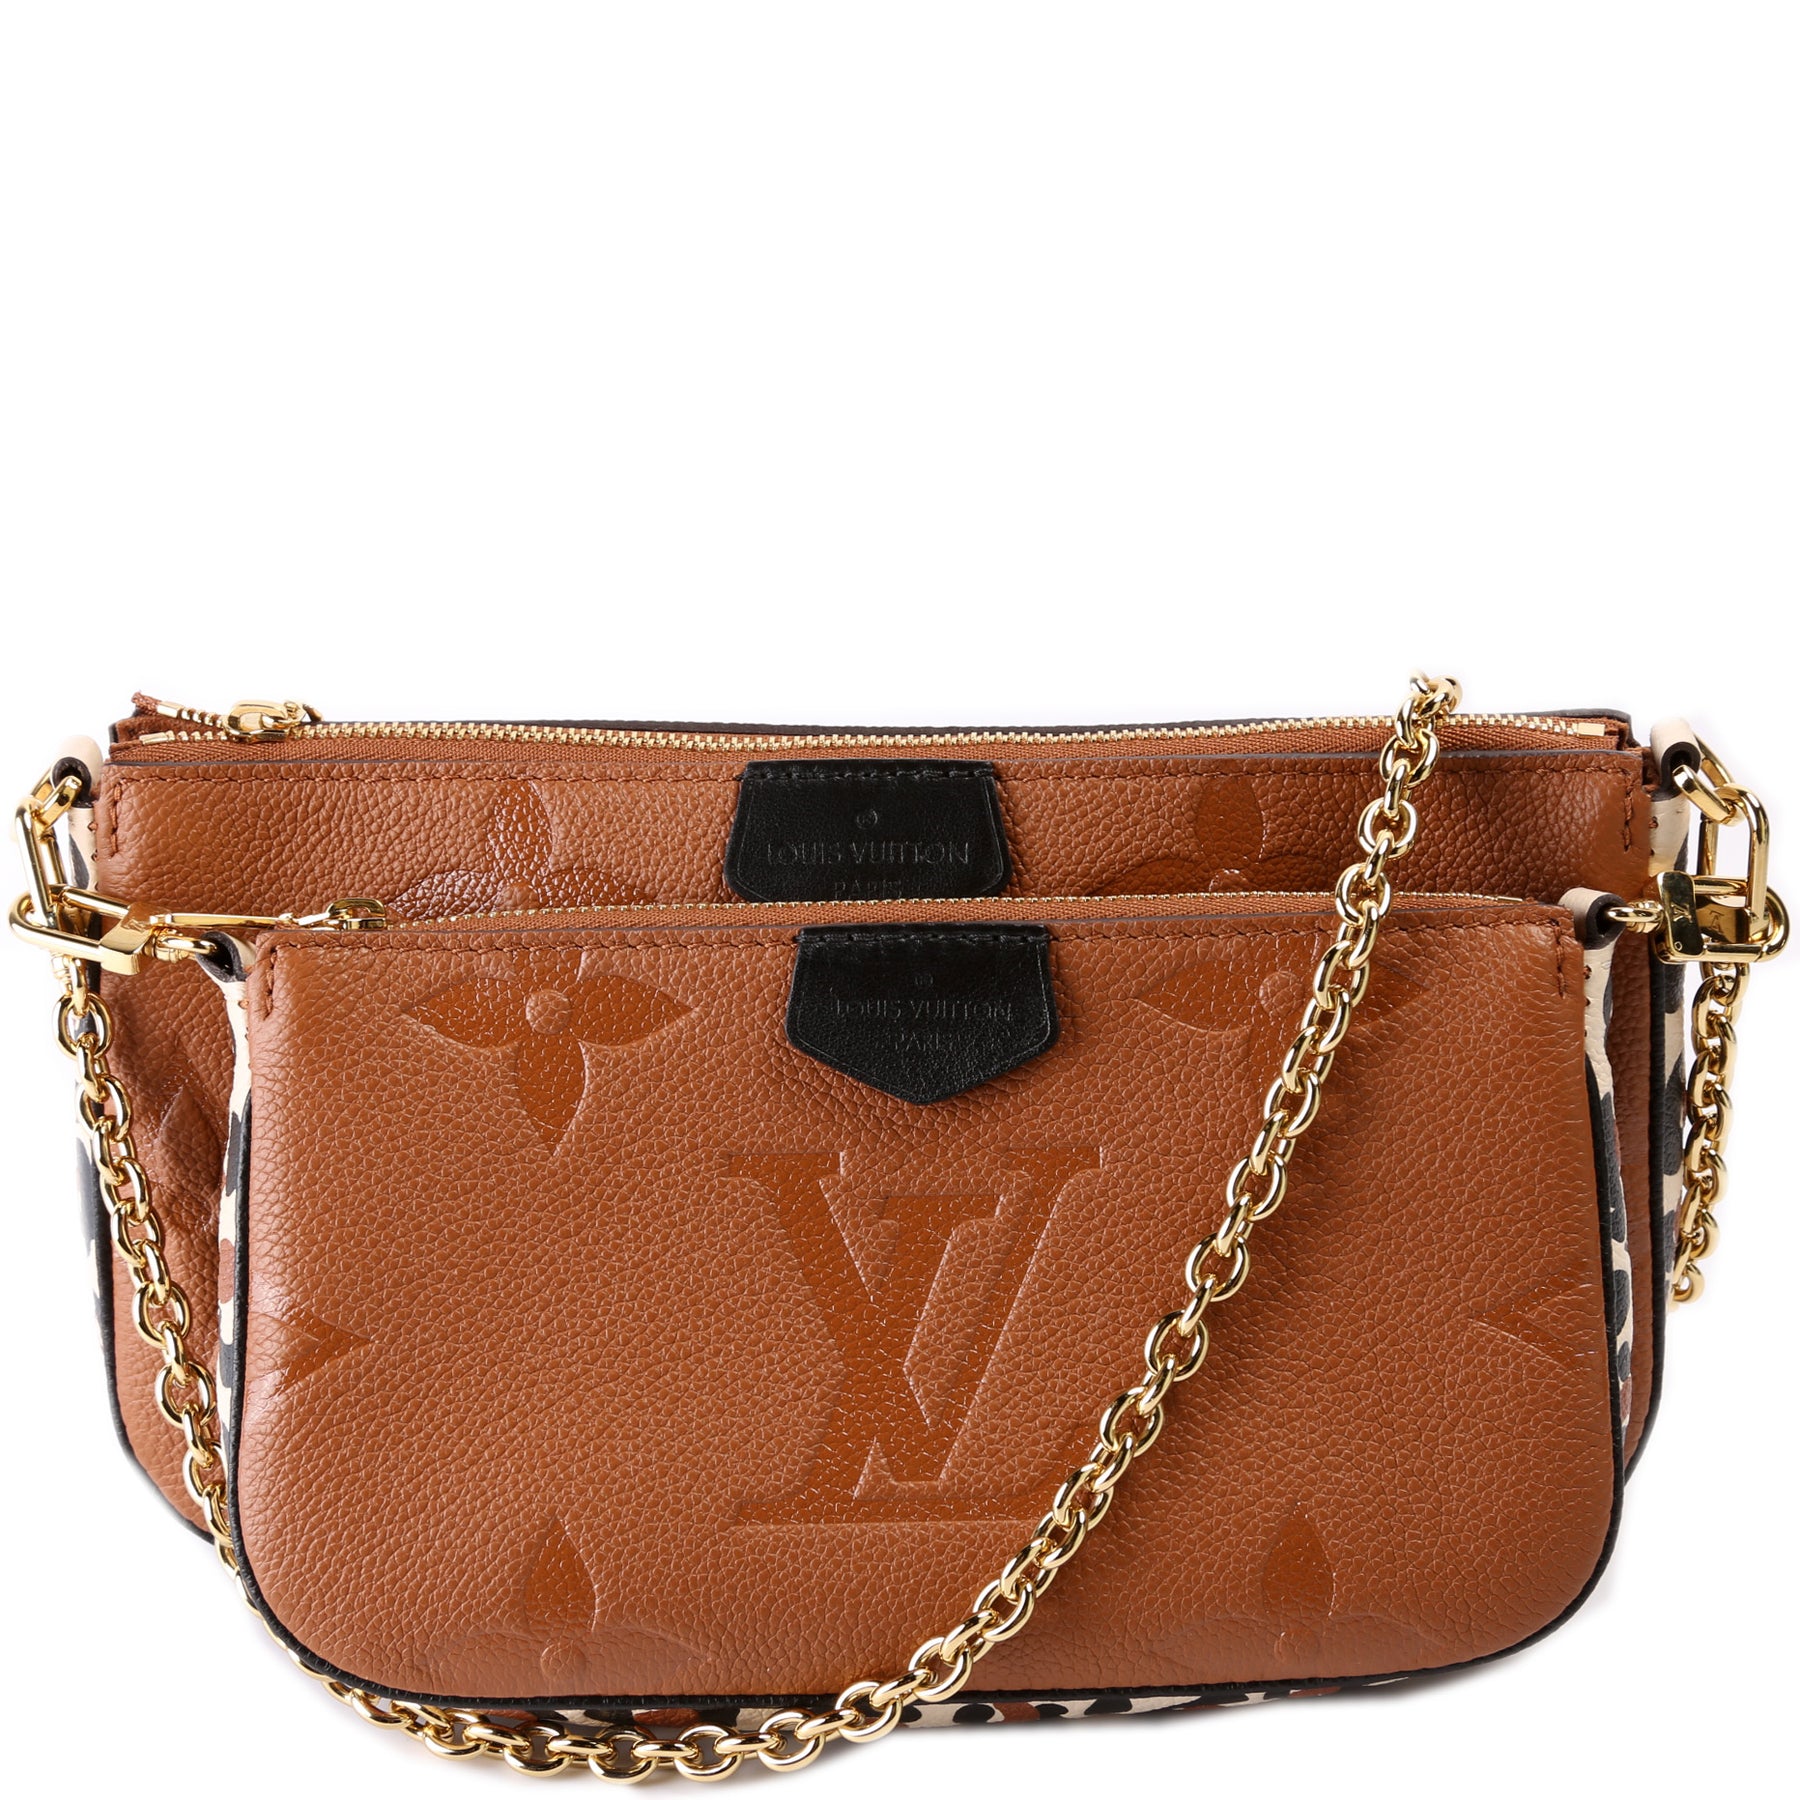 Louis Vuitton Empreinte Multi Pochette - Why I exchanged my bag